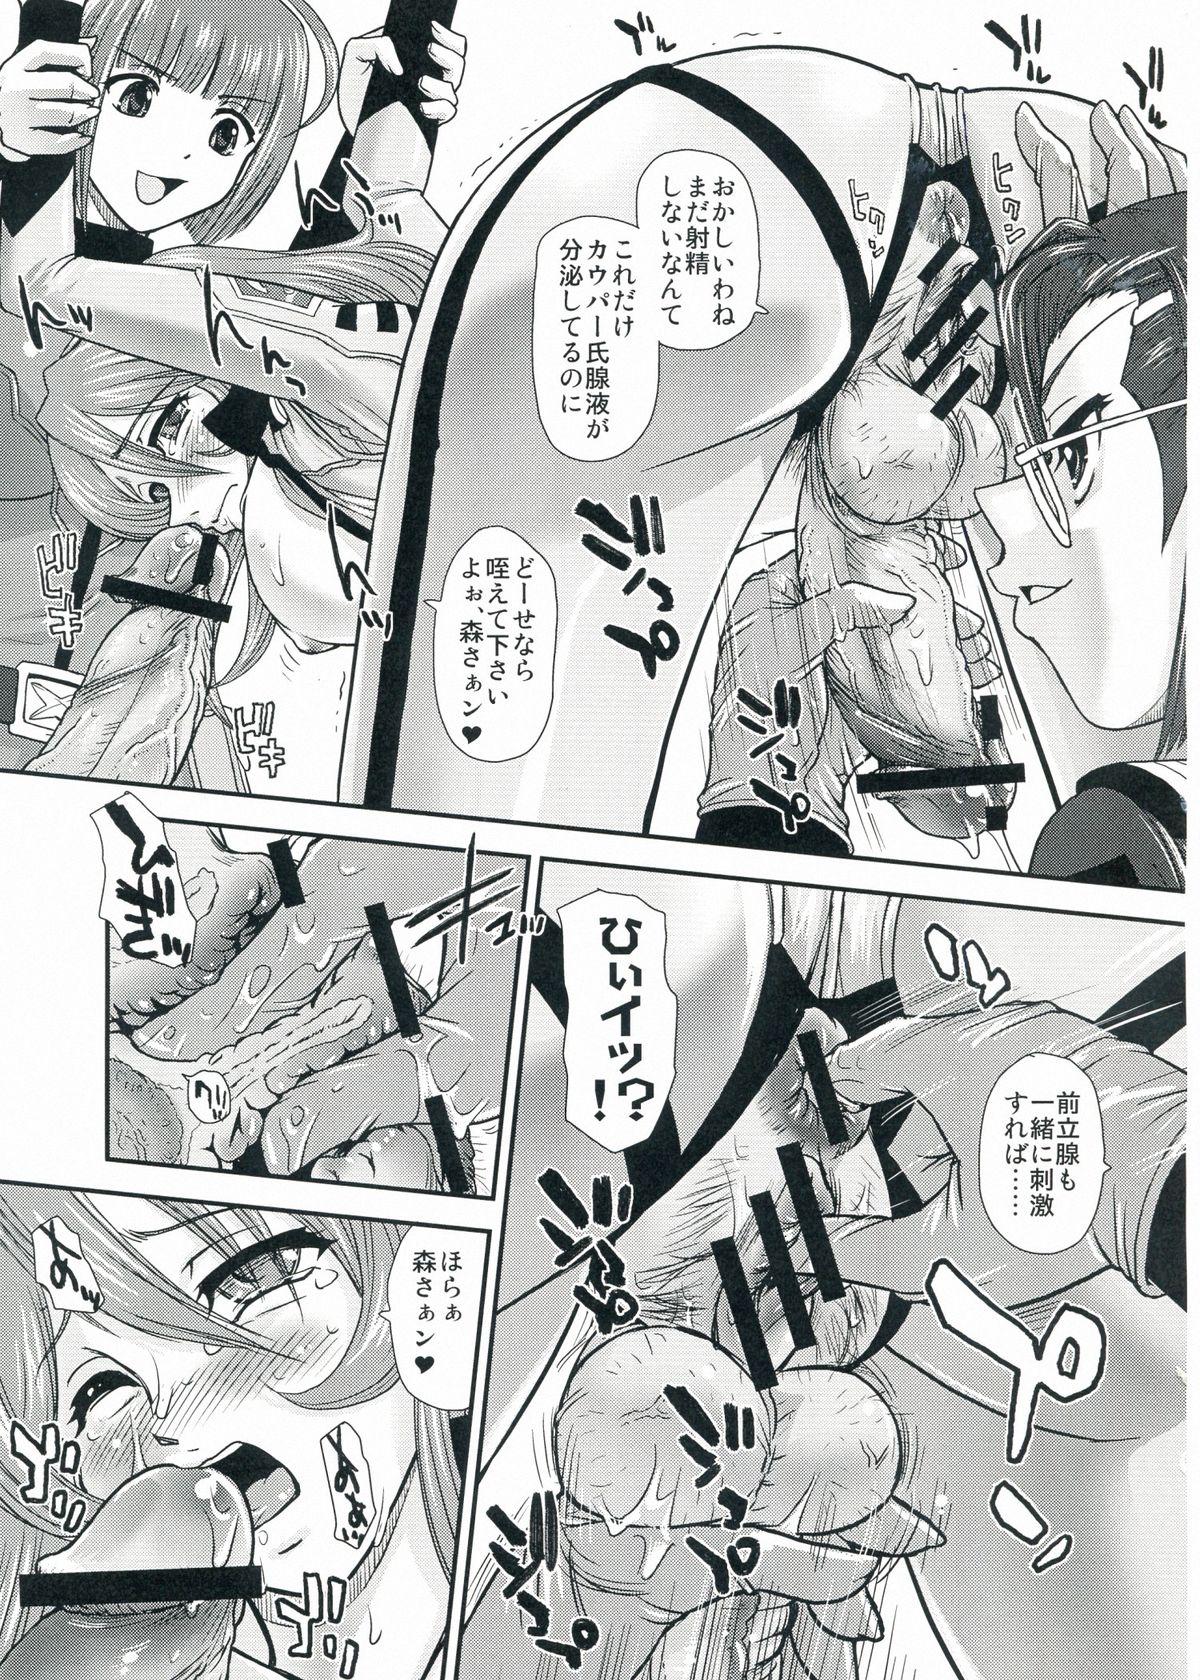 Joven YAMATO2199 Alternative - Space battleship yamato Roludo - Page 9